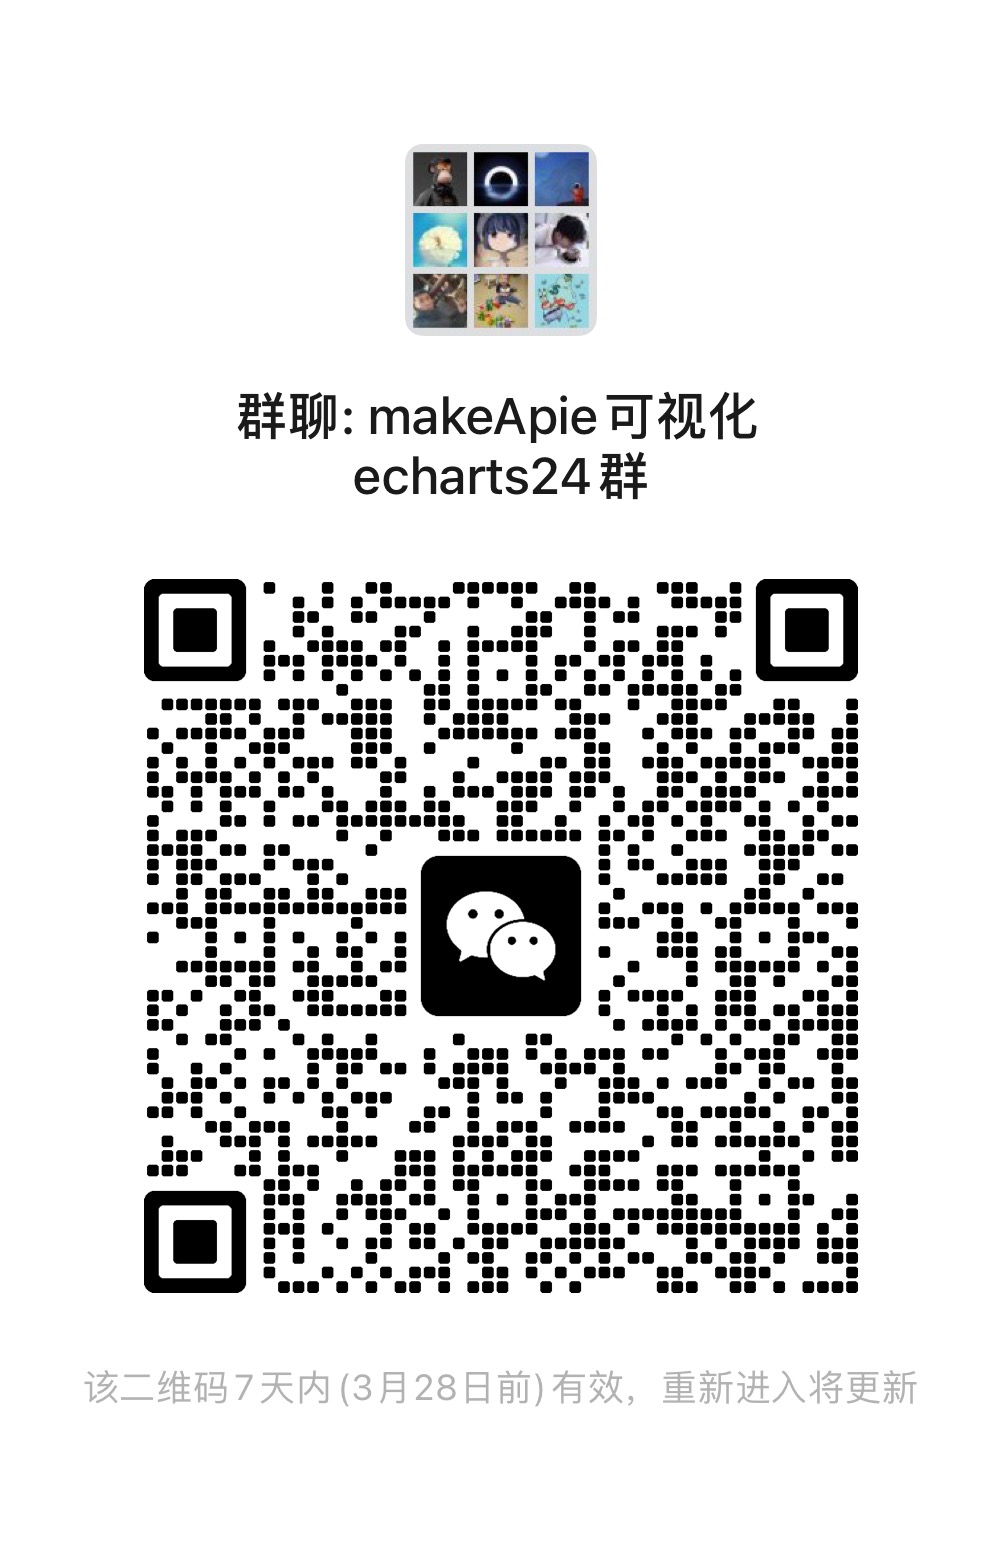 makeApie可视化echarts24群